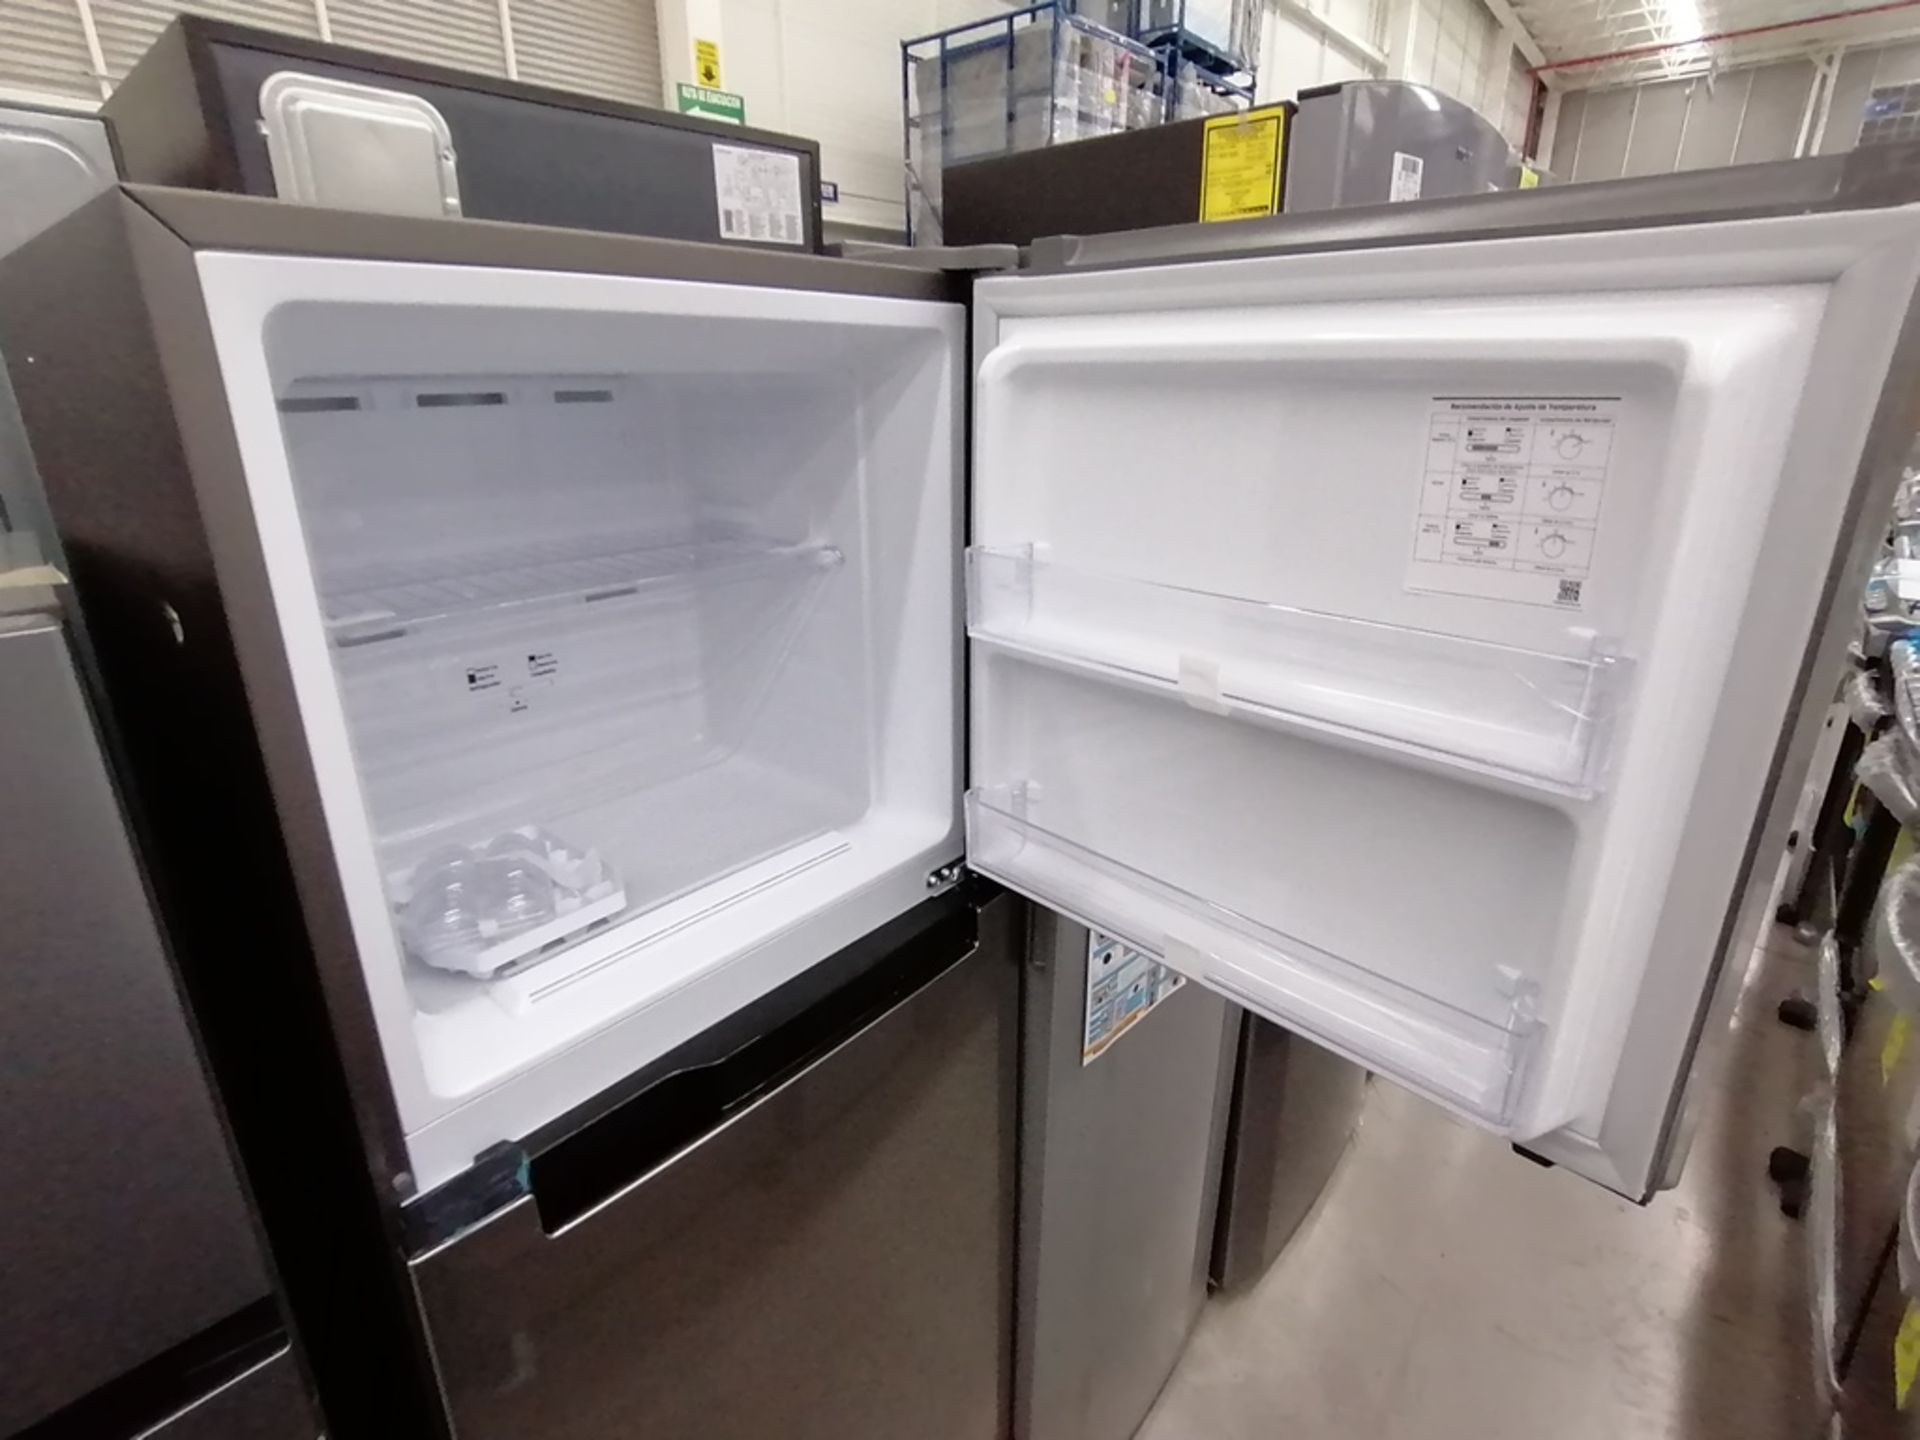 Lote de 2 refrigeradores incluye: 1 Refrigerador, Marca Samsung, Modelo RT29K500JS8, Serie 0AZS4BAR - Image 4 of 16